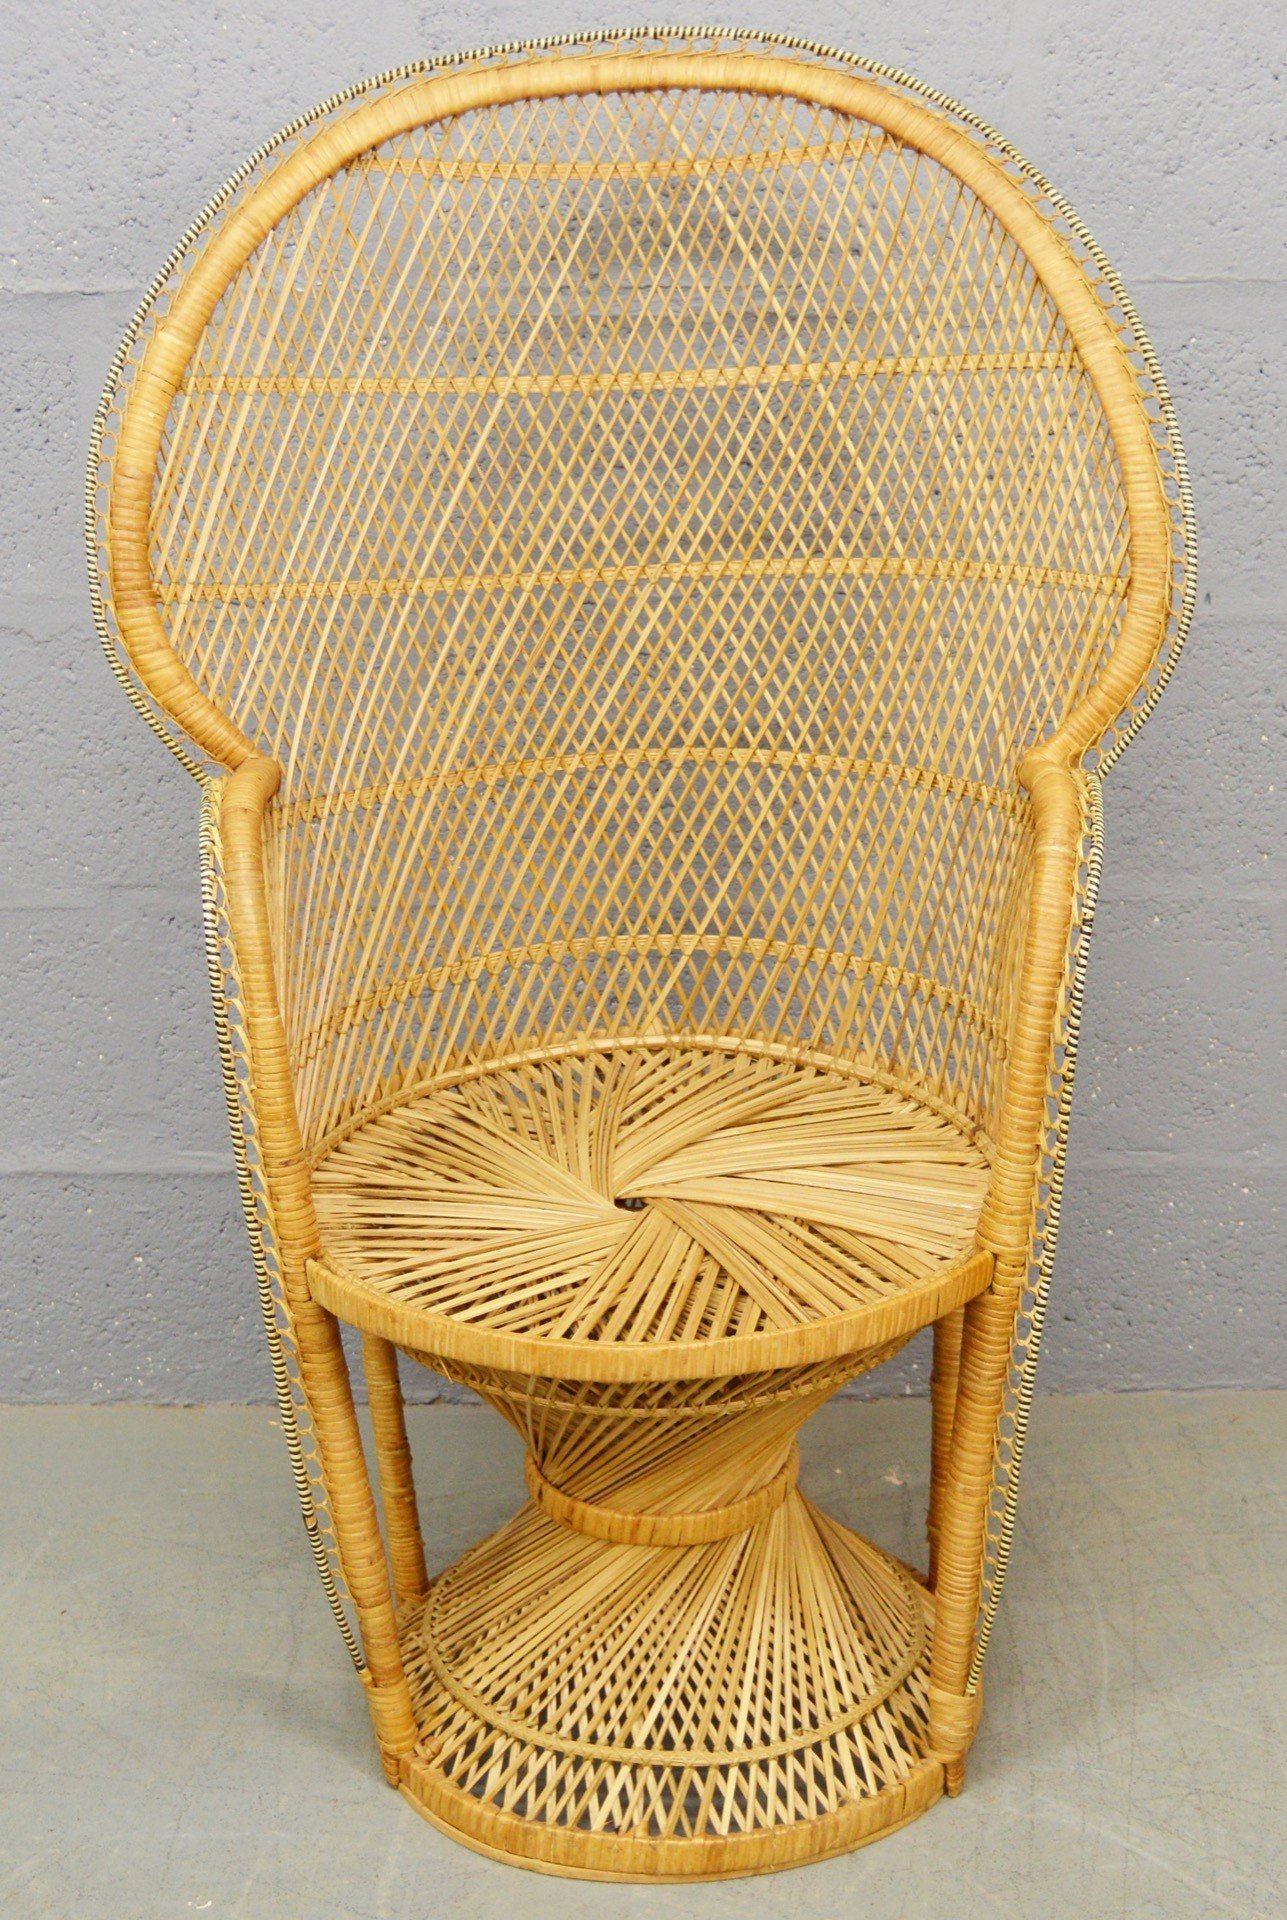 Vintage wicker "Peacock" chair 1970s Design Market